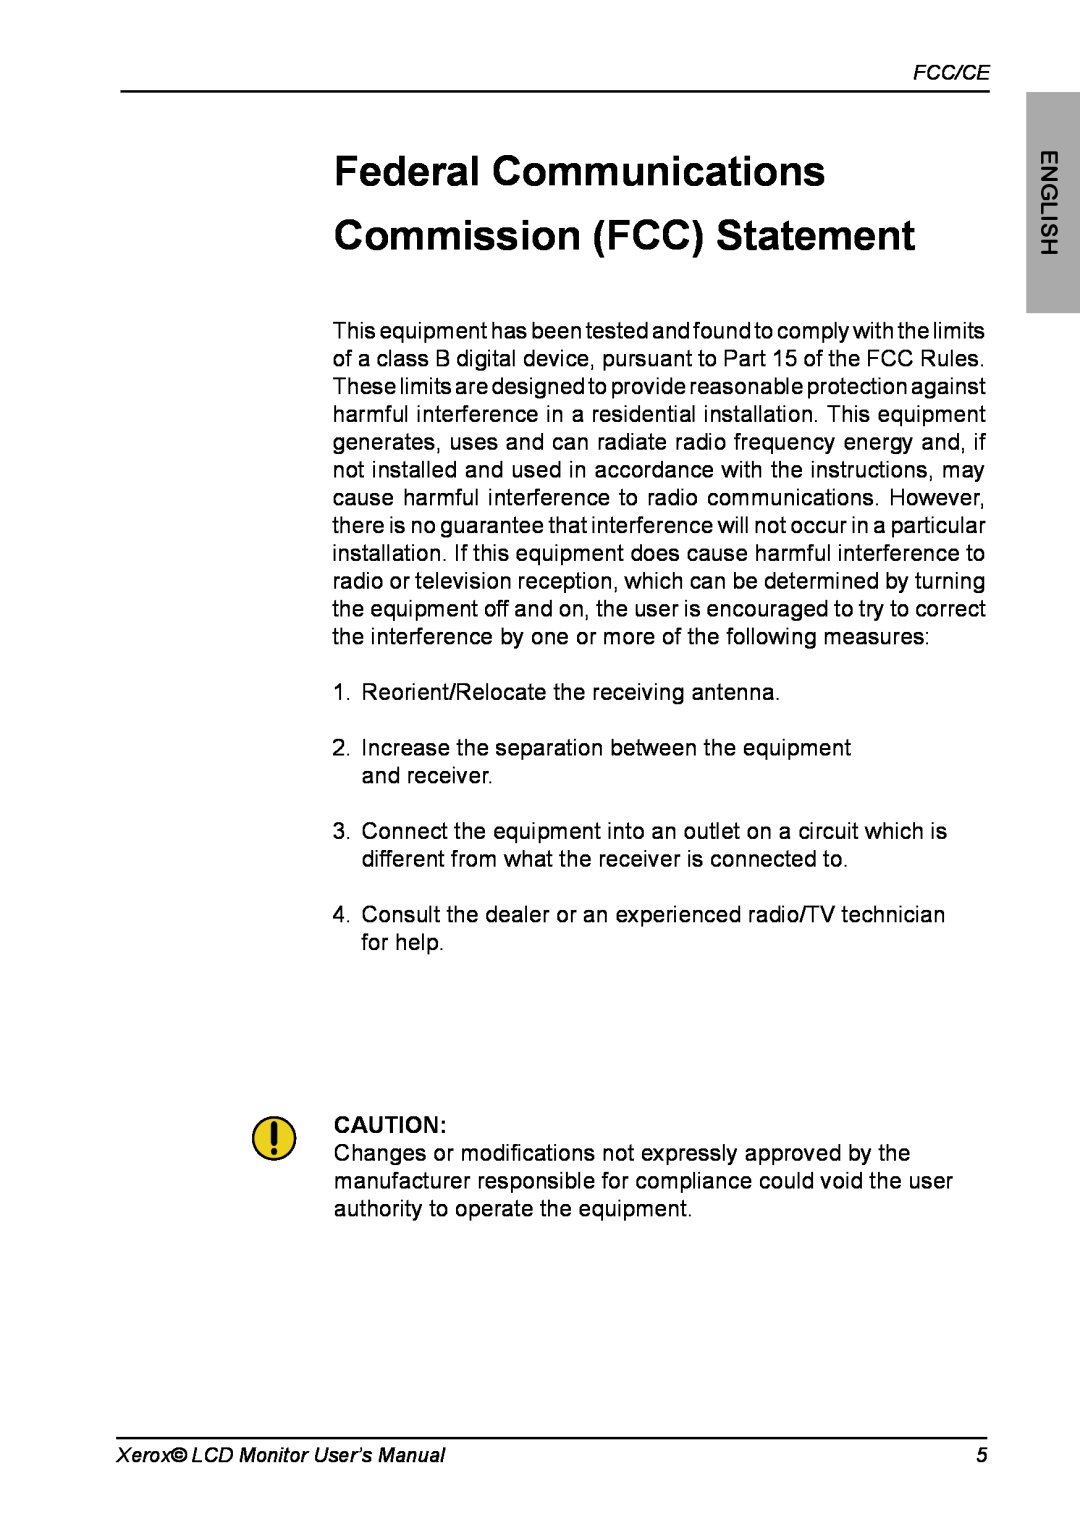 Xerox XM3-19w manual Federal Communications Commission FCC Statement, English 